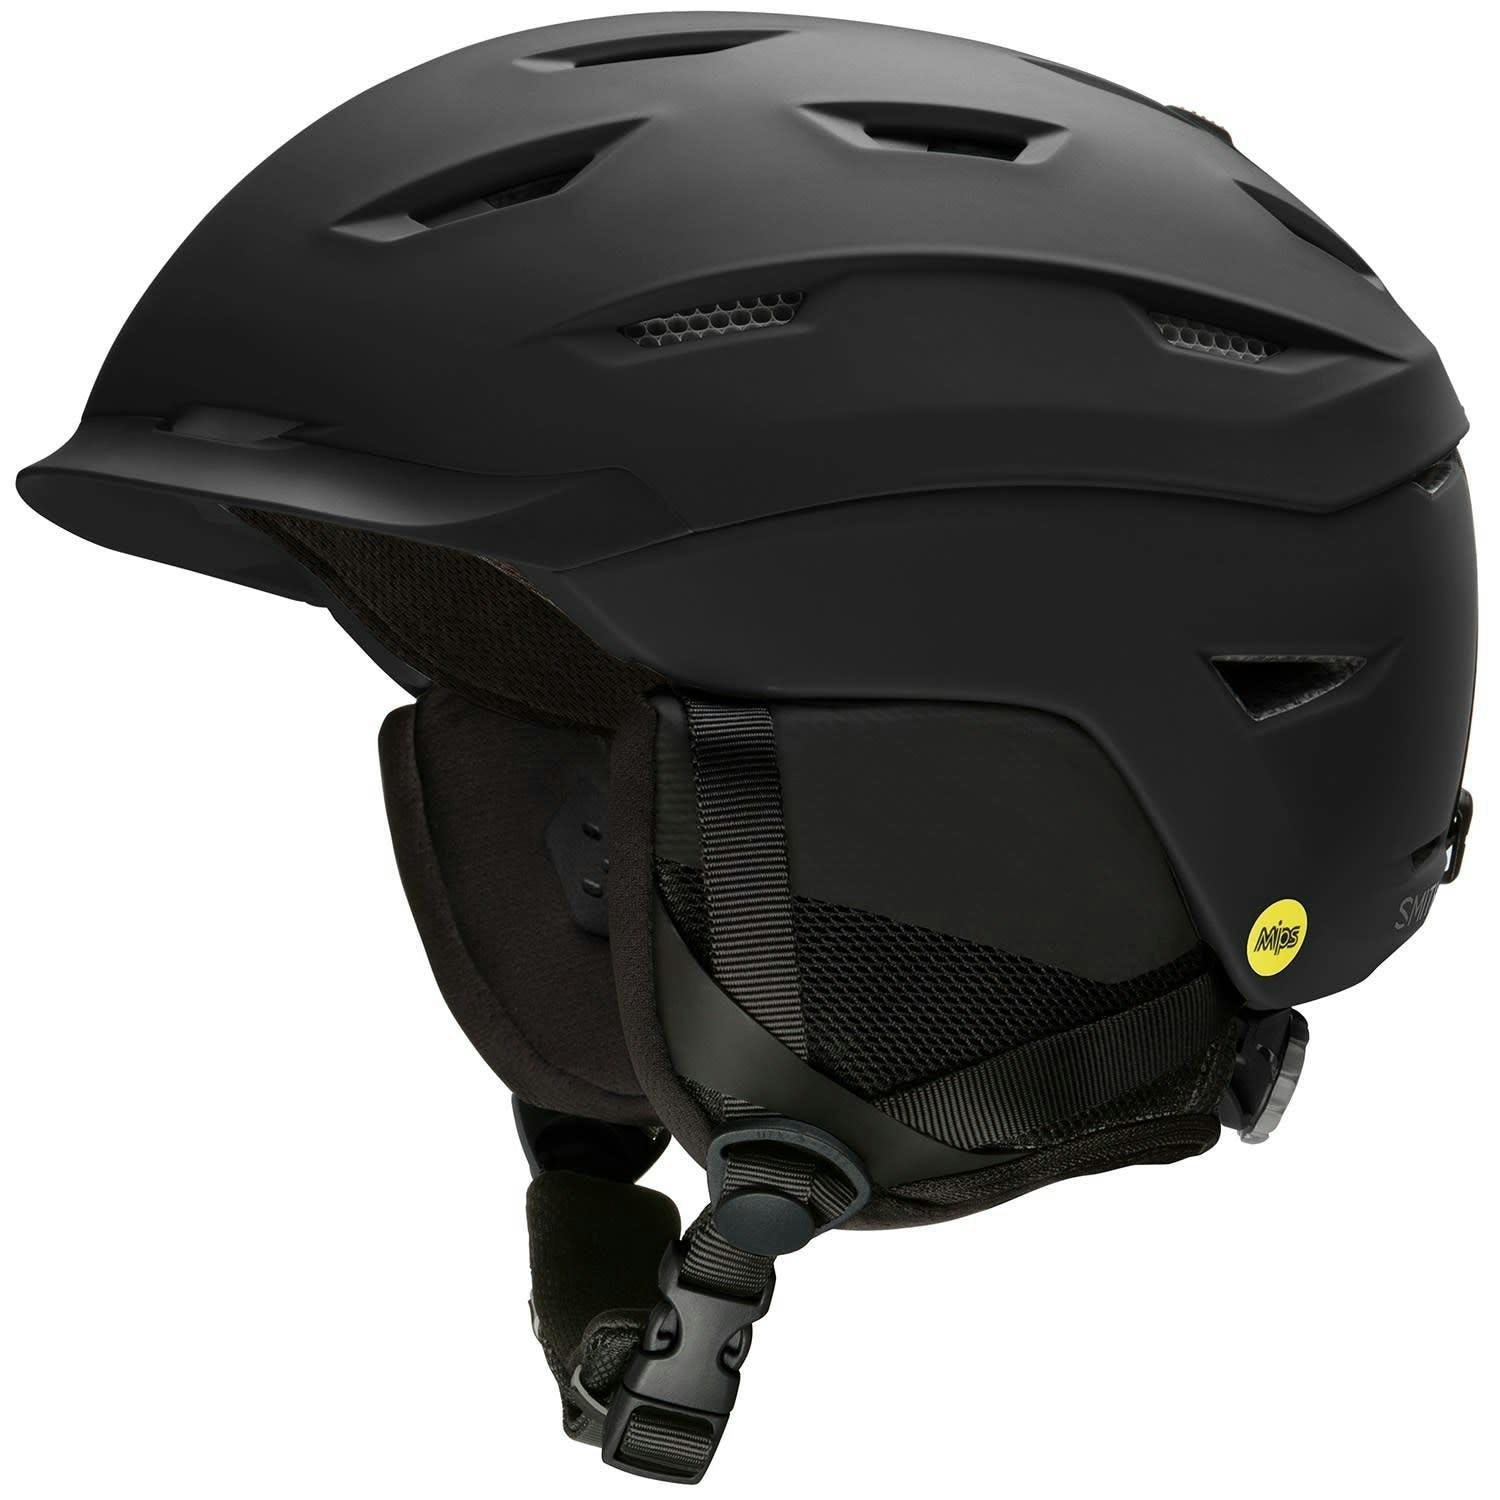 A black ski helmet